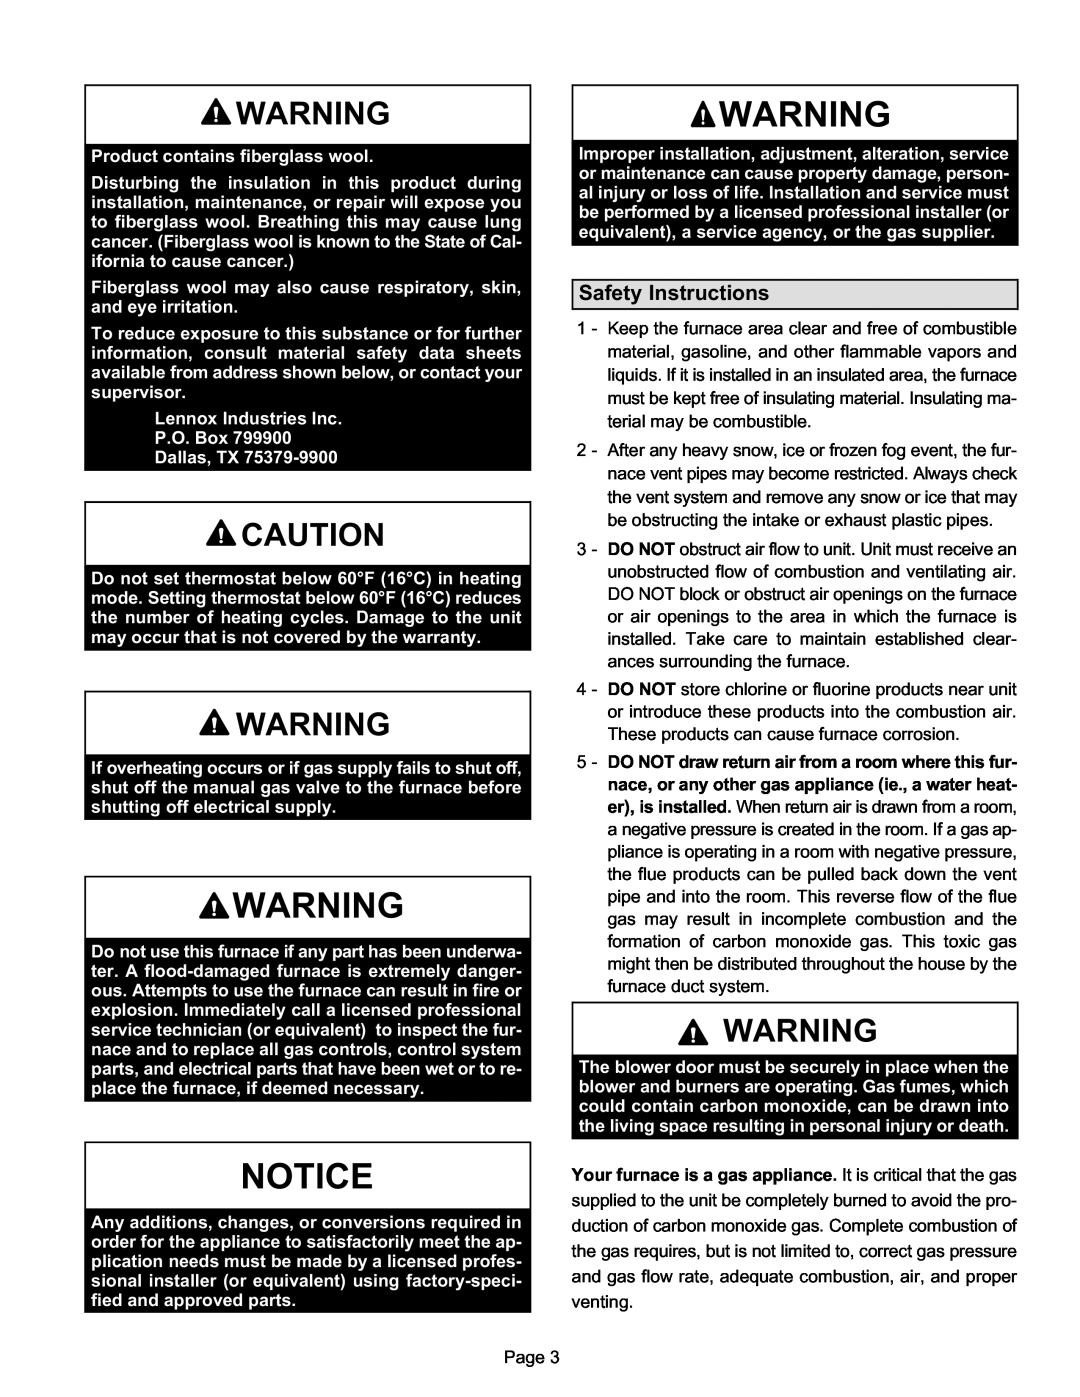 Lennox International Inc cariable capacity gas furnace, slp98uh manual Safety Instructions 